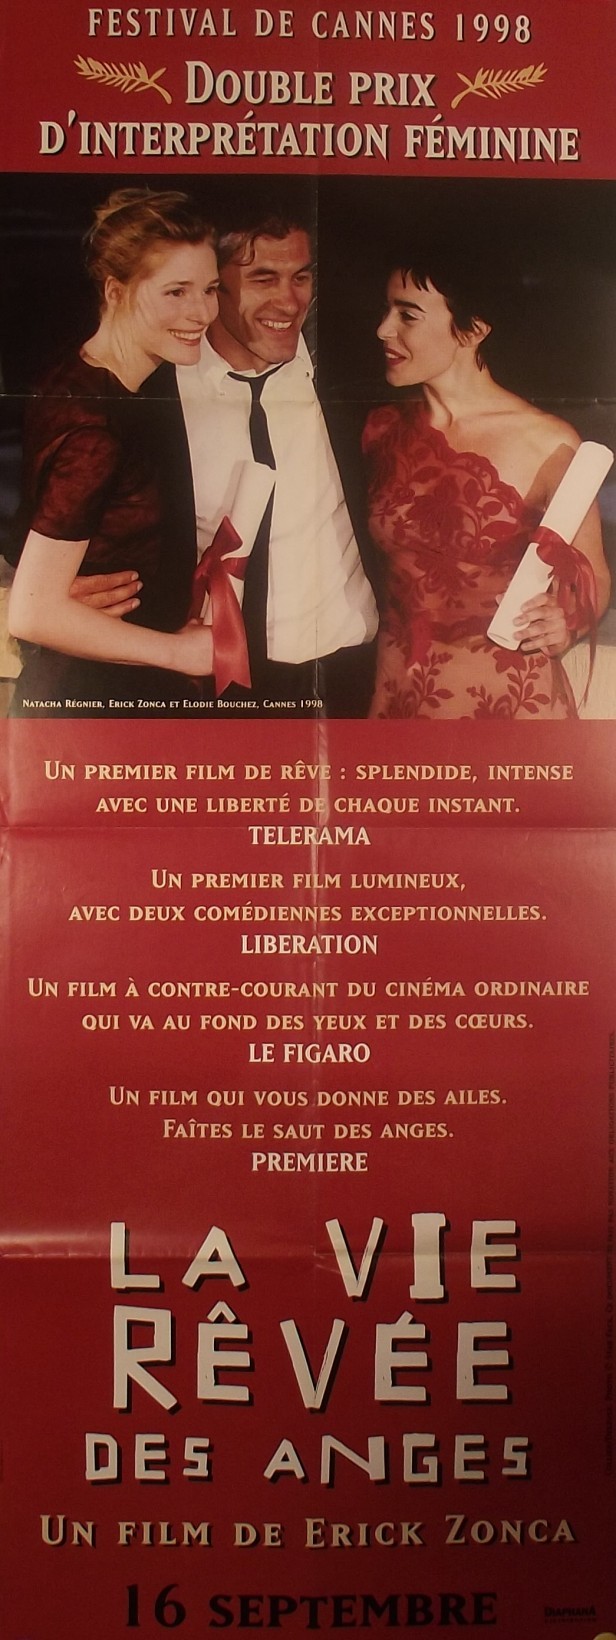 Affiche du film JUSTE LA FIN DU MONDE - CINEMAFFICHE